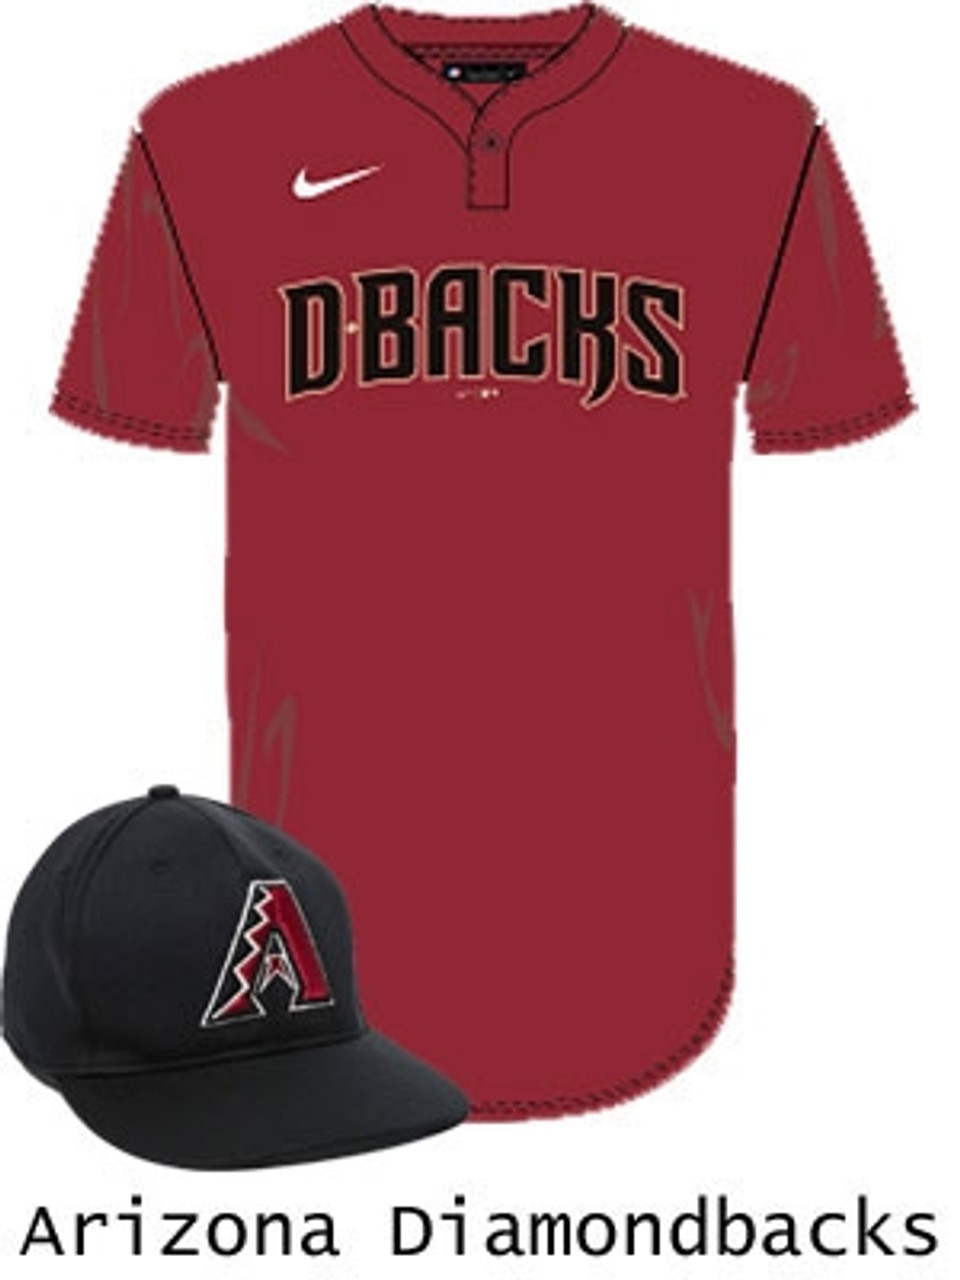 Arizona Diamondbacks' Nike MLB City Connect Series uniform impresses